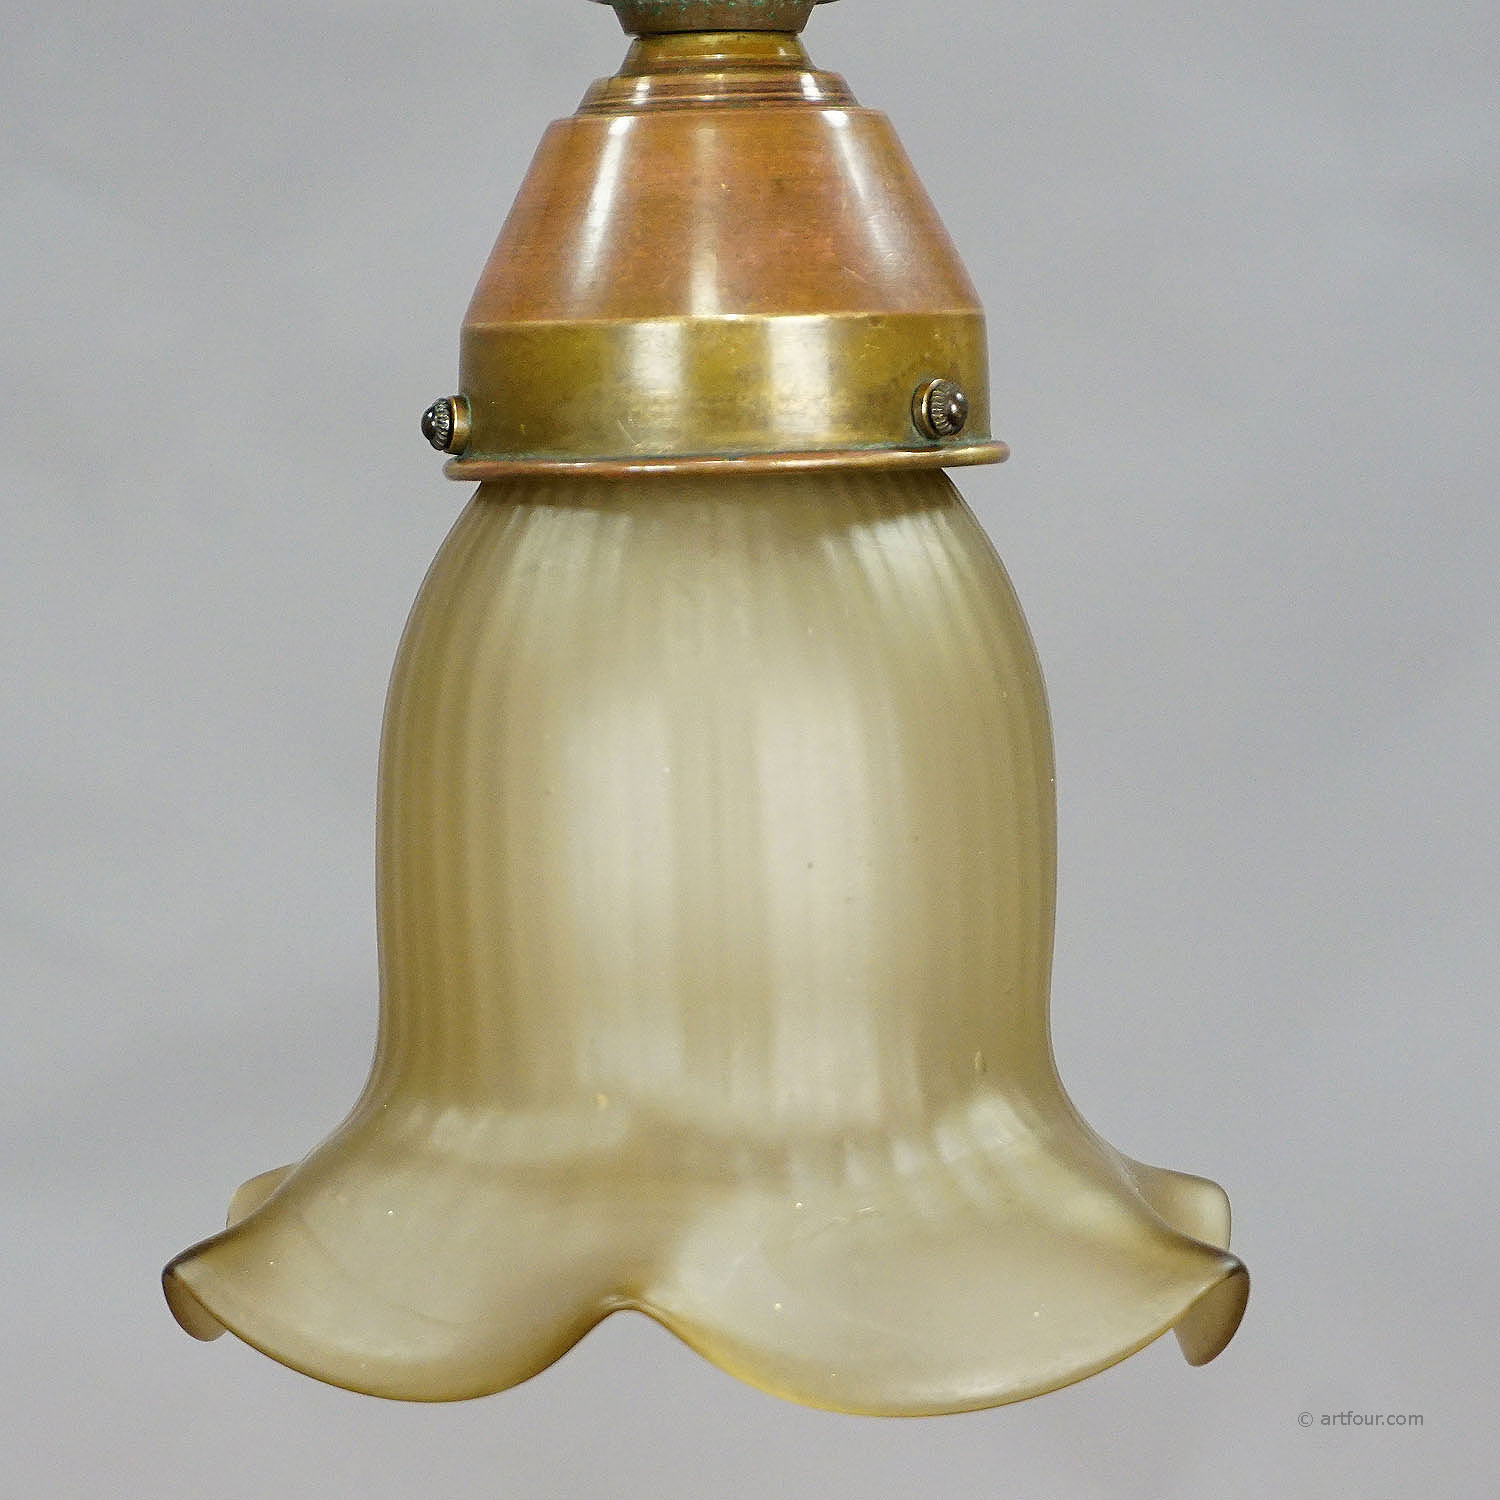 Antique Art Nouveau Pendant Light with Satinized Glass Shade